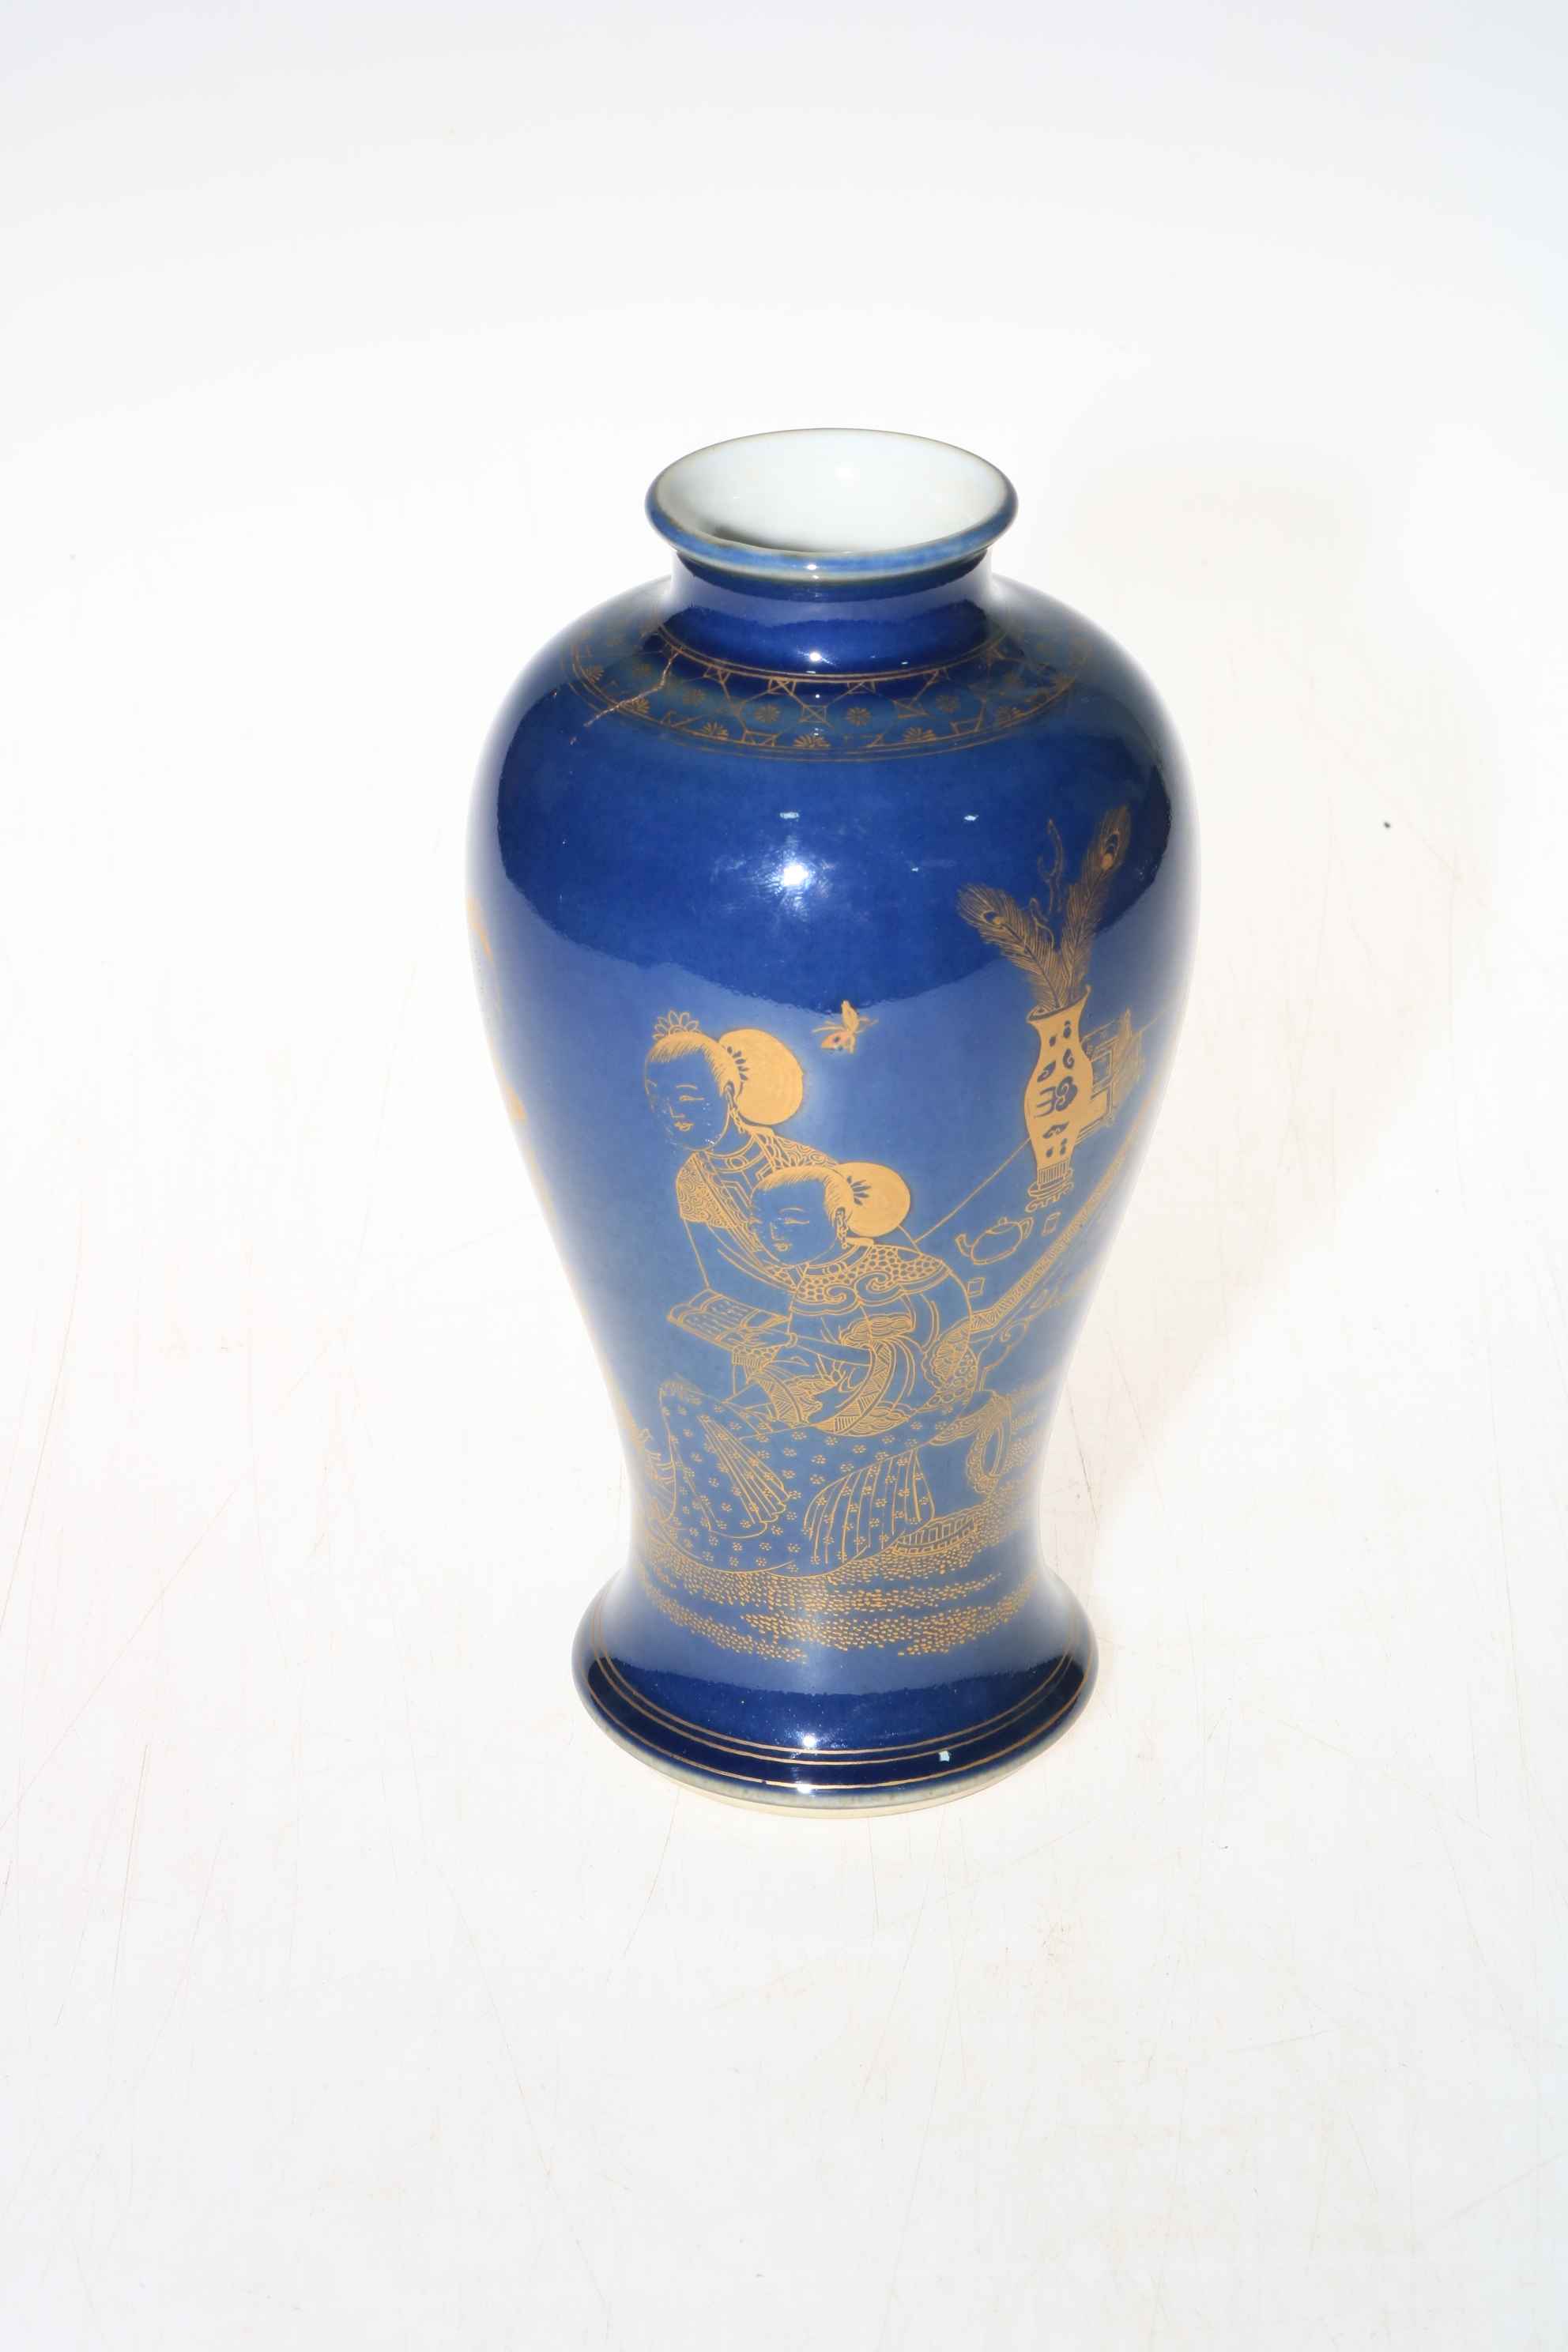 Chinese baluster vase with gilt female figure decoration on blue ground, 19.5cm.